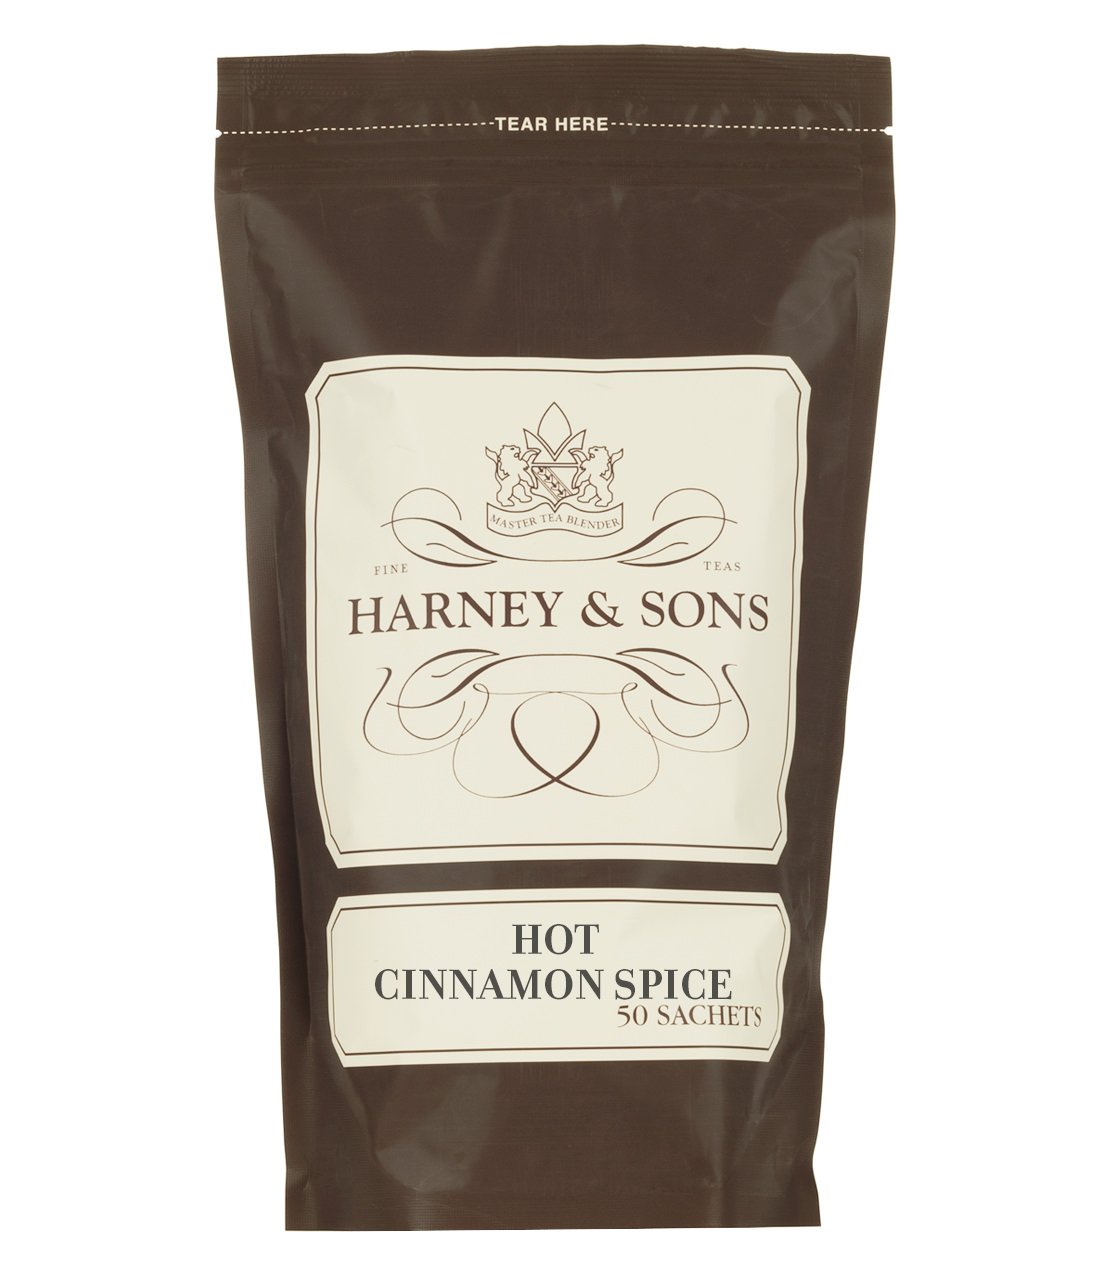 Hot Cinnamon Spice, Bag of 50 Sachets - Sachets Bag of 50ct Sachets - Harney & Sons Fine Teas